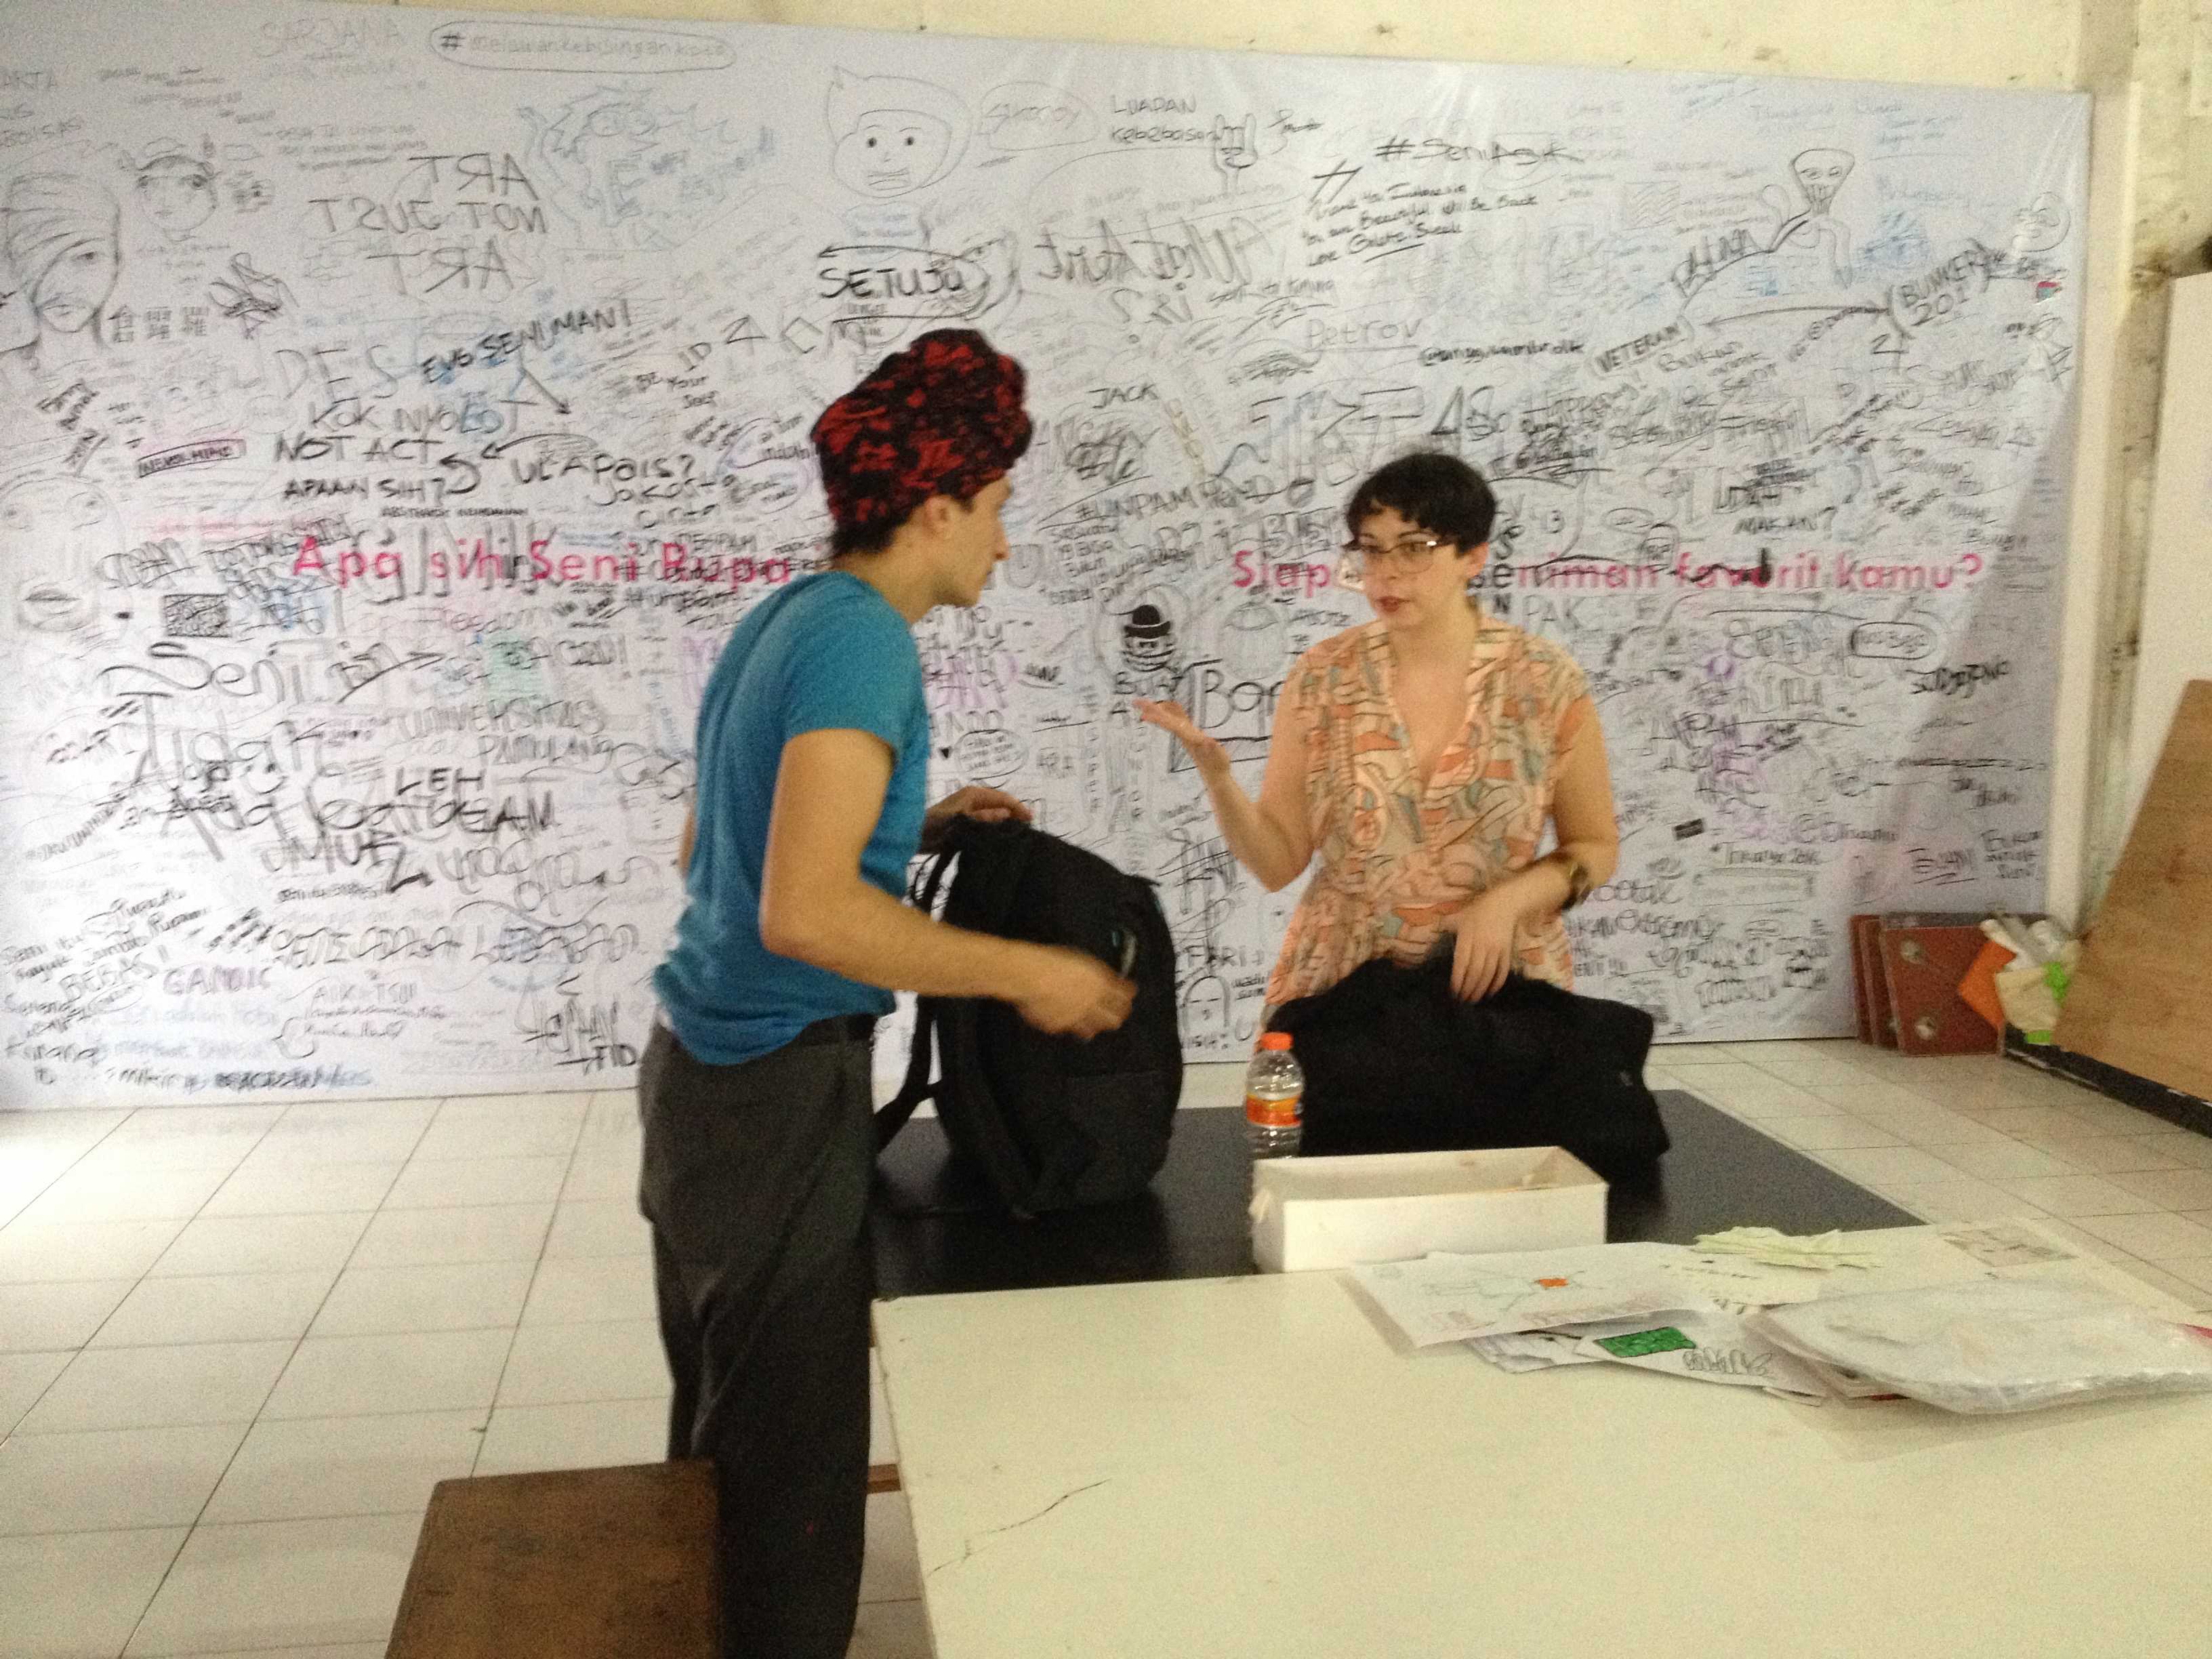 Tutorial Marina Vishmidt with then DAI student Panagiotis Panagiotakopoulos. Jakarta, 2015